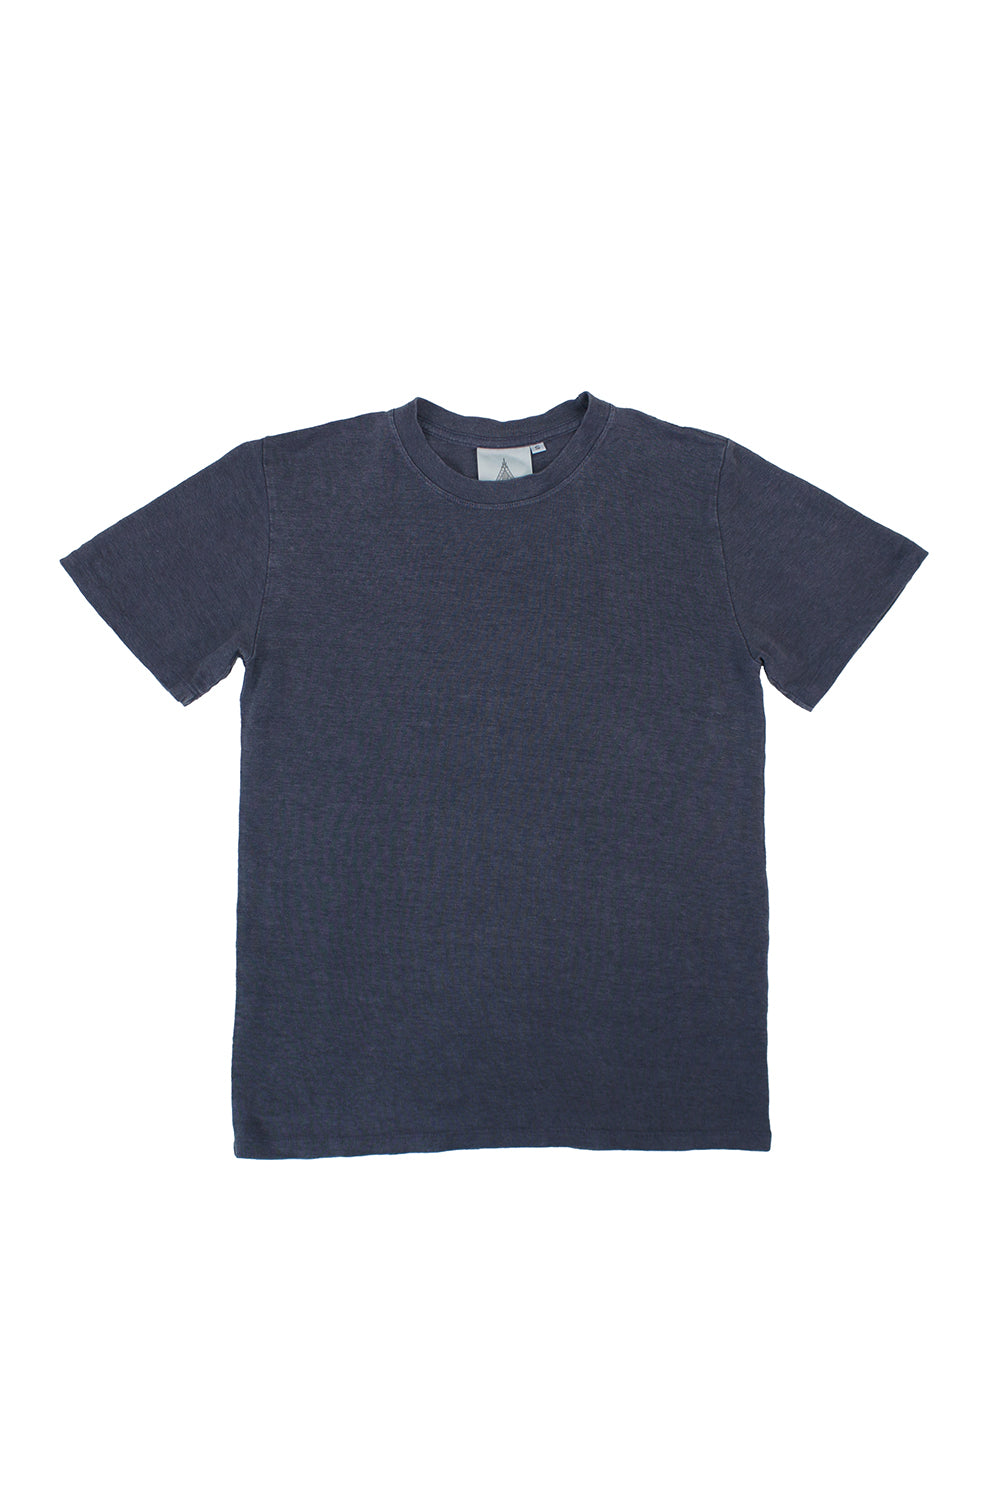 Mana 10 - 100% Hemp Tee | Jungmaven Hemp Clothing & Accessories / Color: Diesel Gray